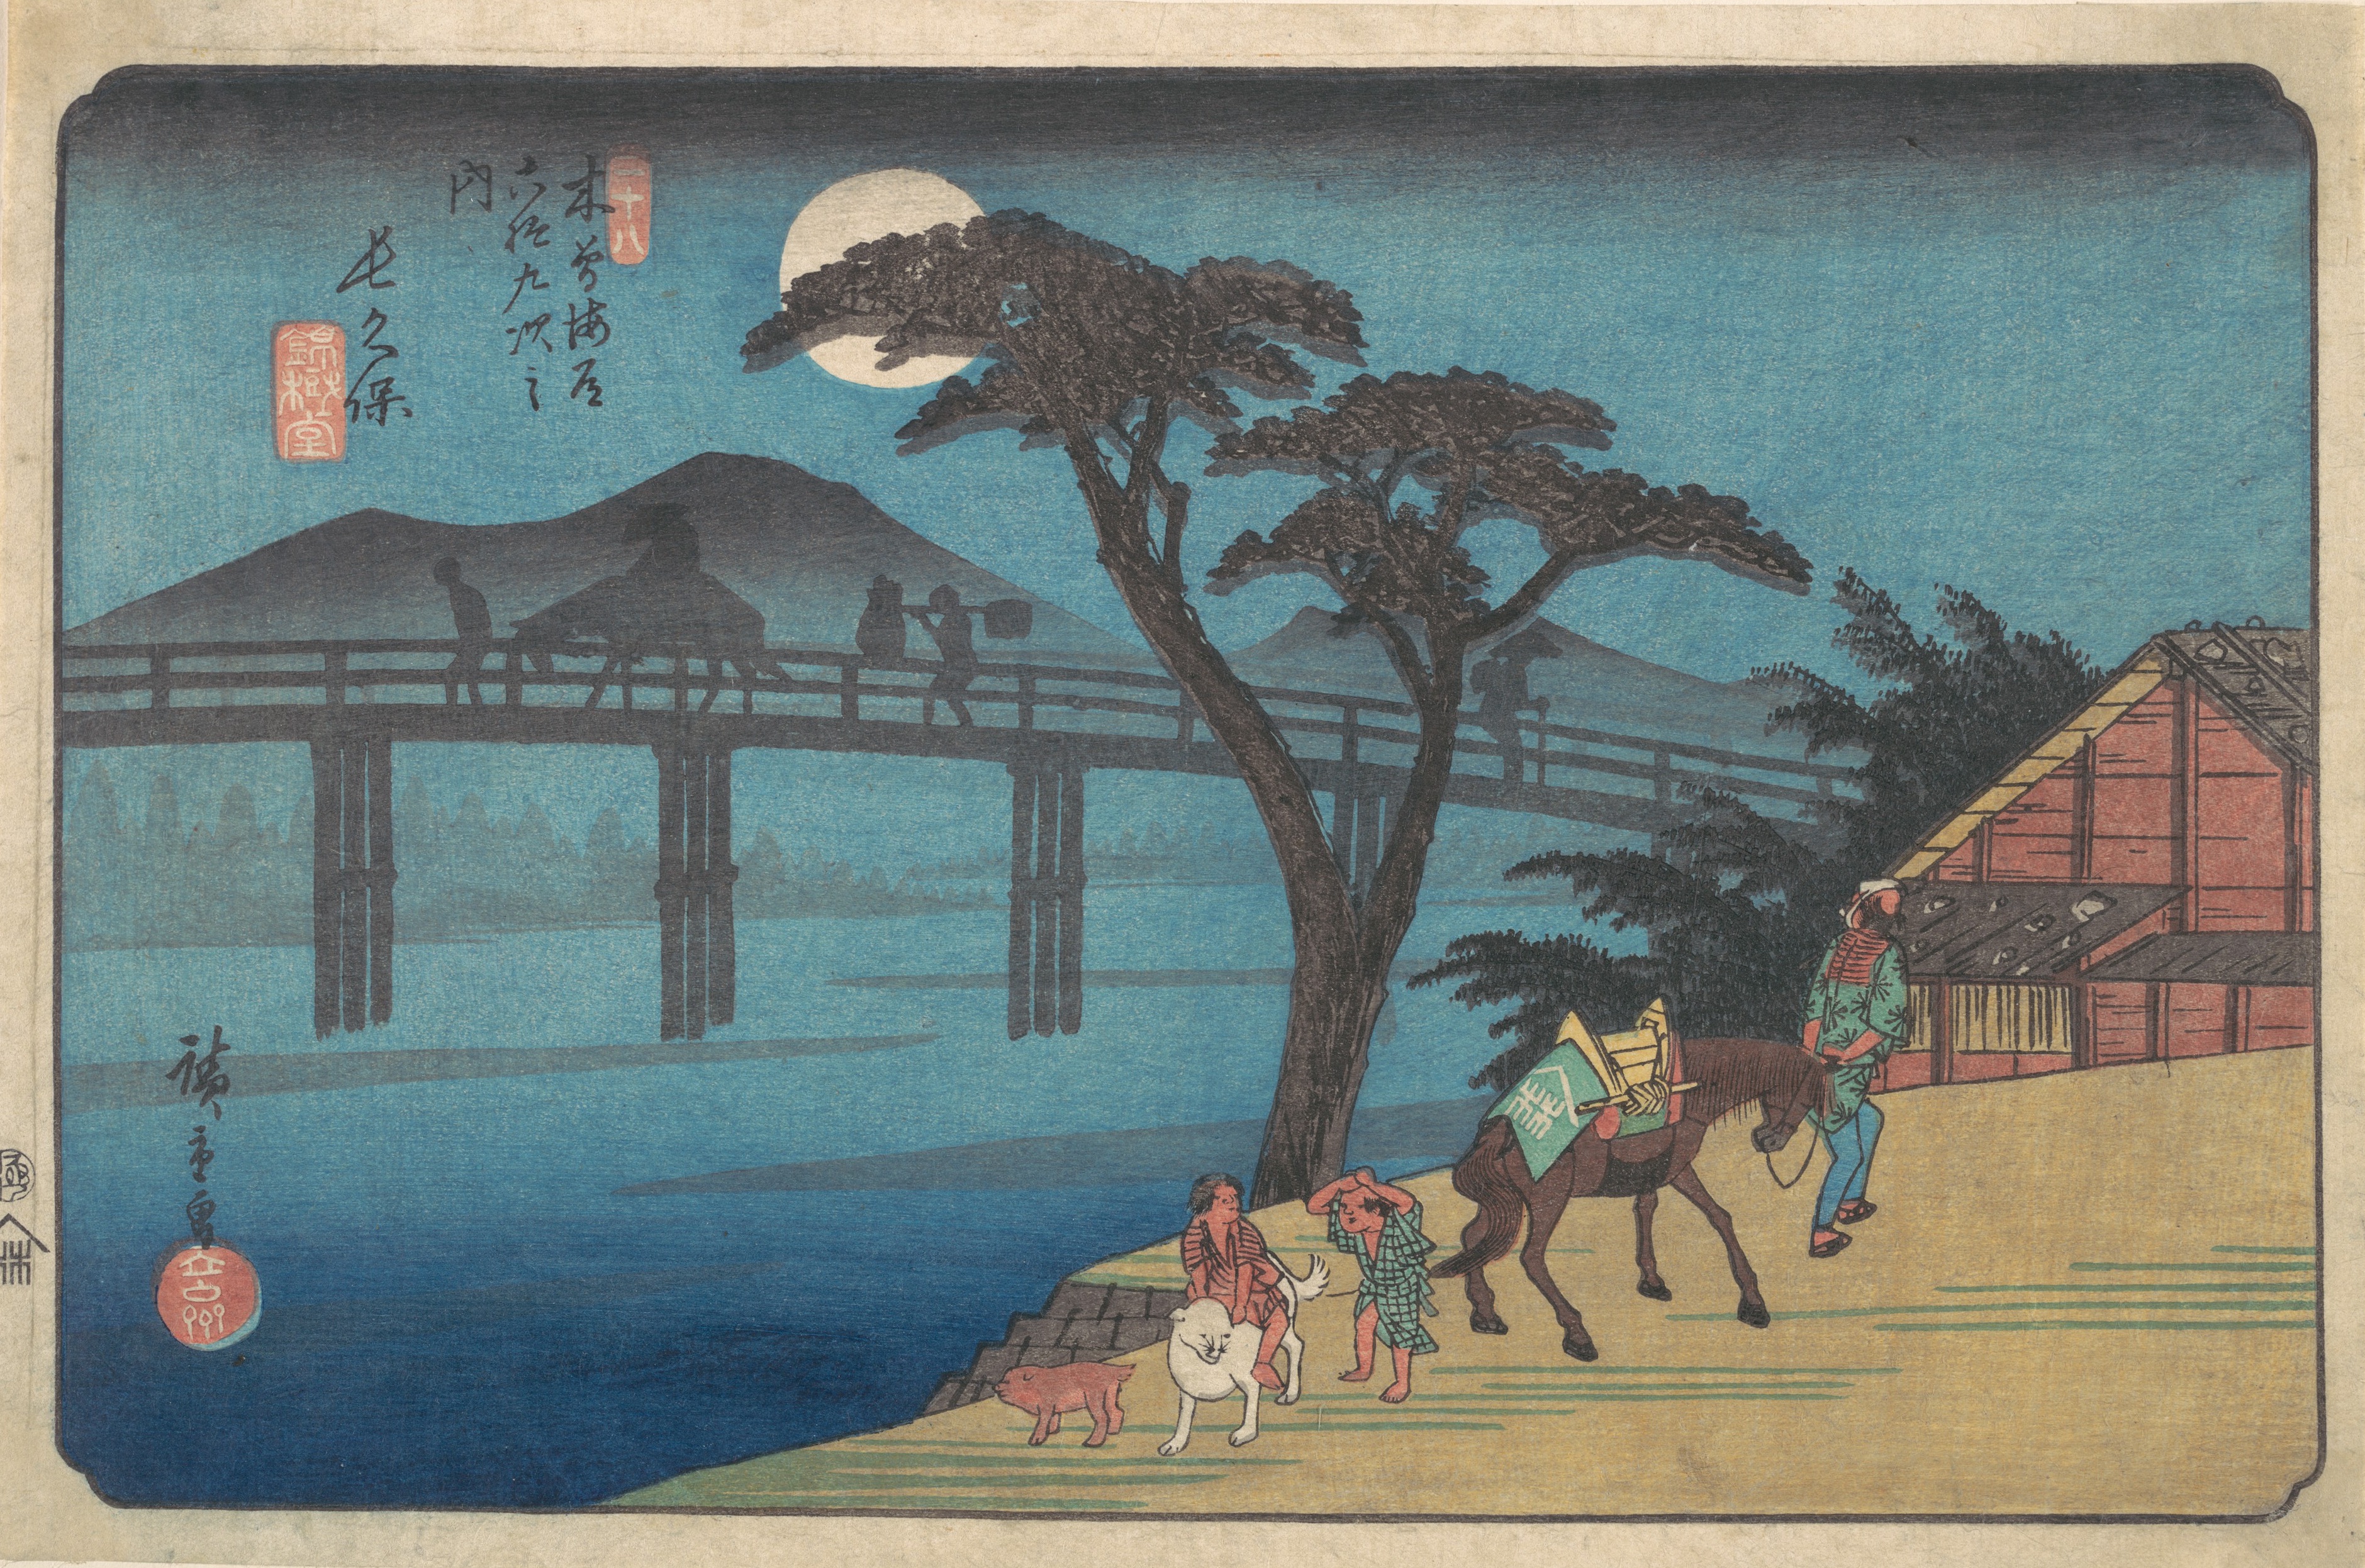 Nagakubo Station by  Hiroshige - ca. 1836 - 22.2 x 34.9 cm Metropolitan Museum of Art